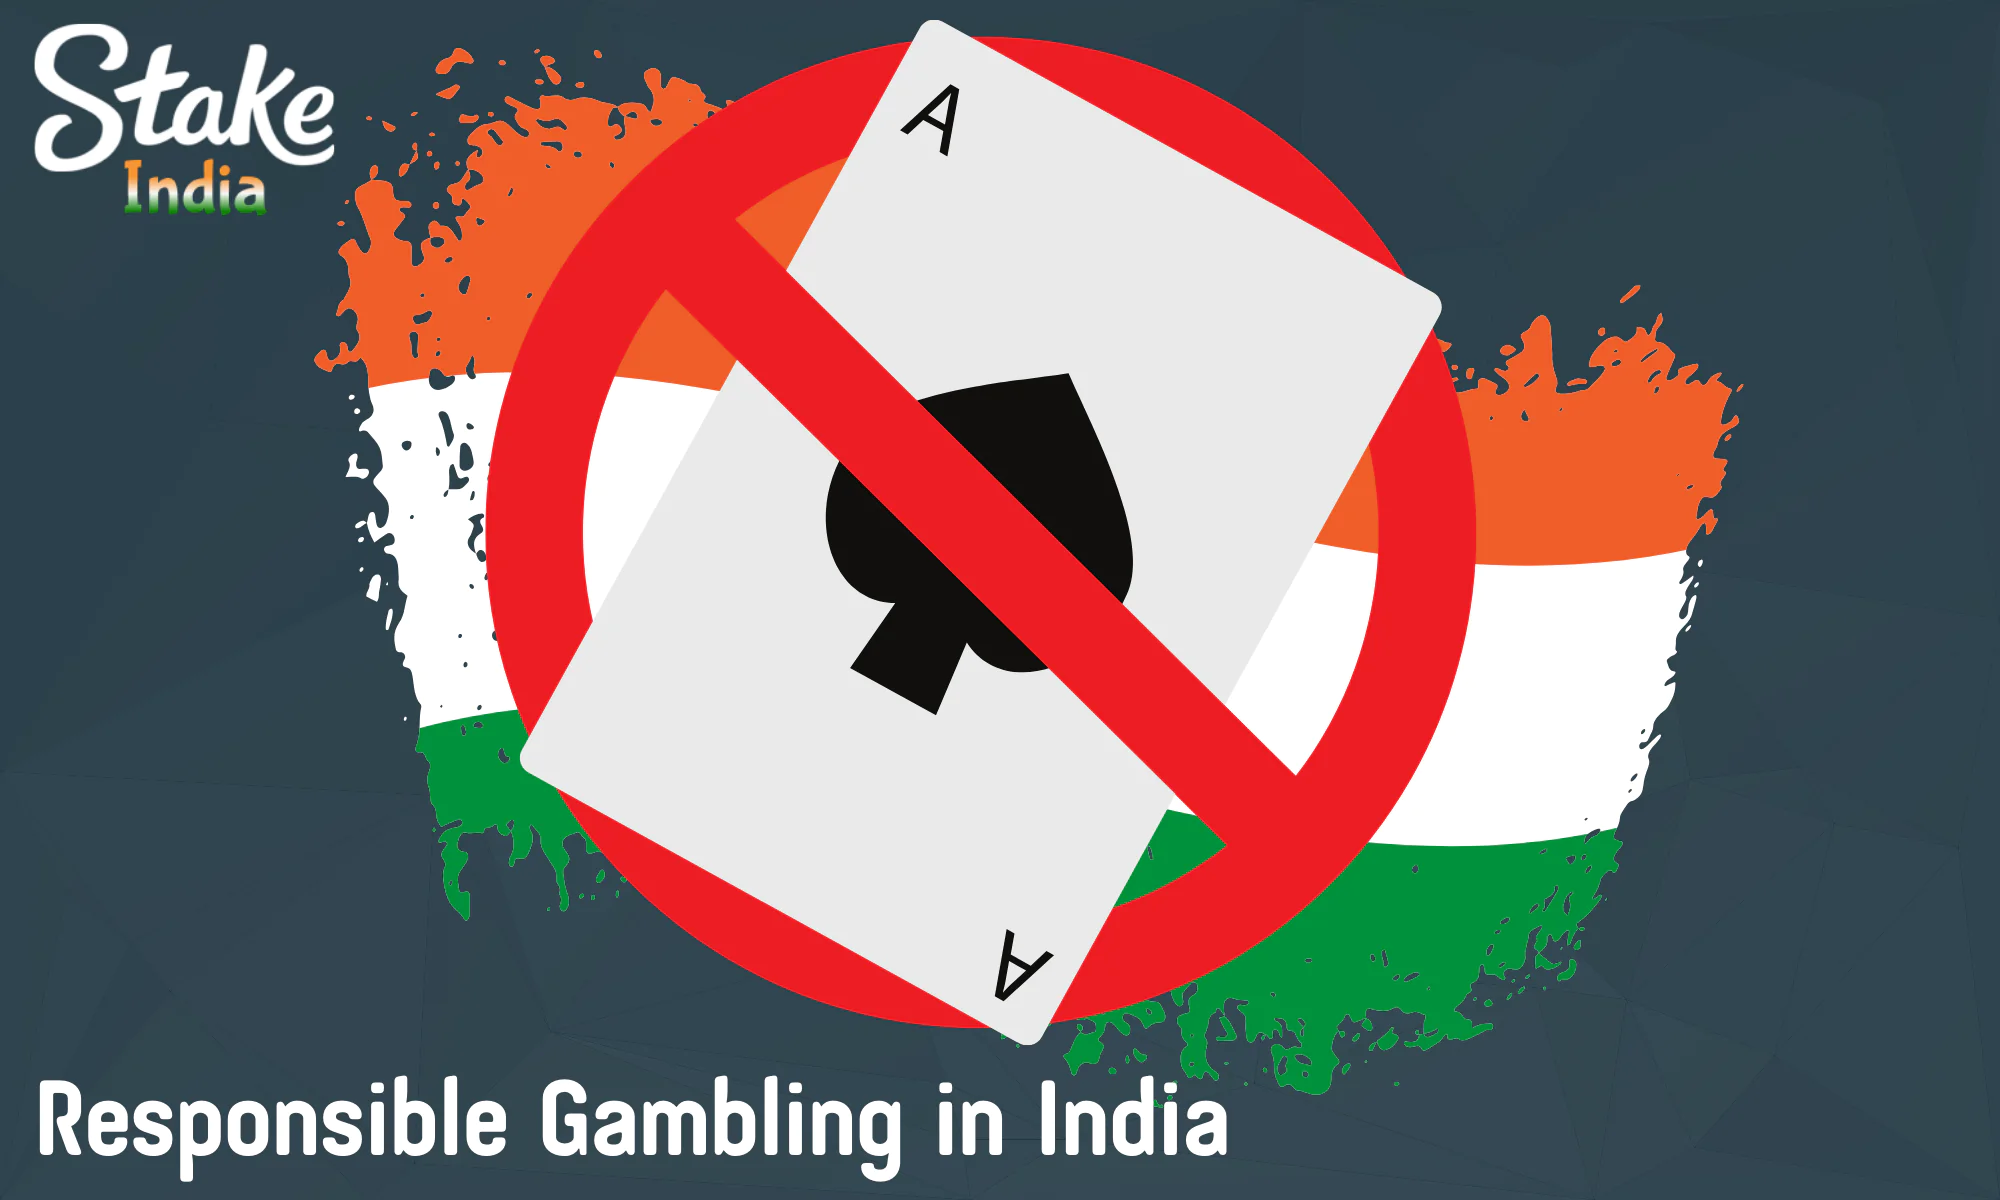 Stake Casino adheres to the rules of responsible gambling